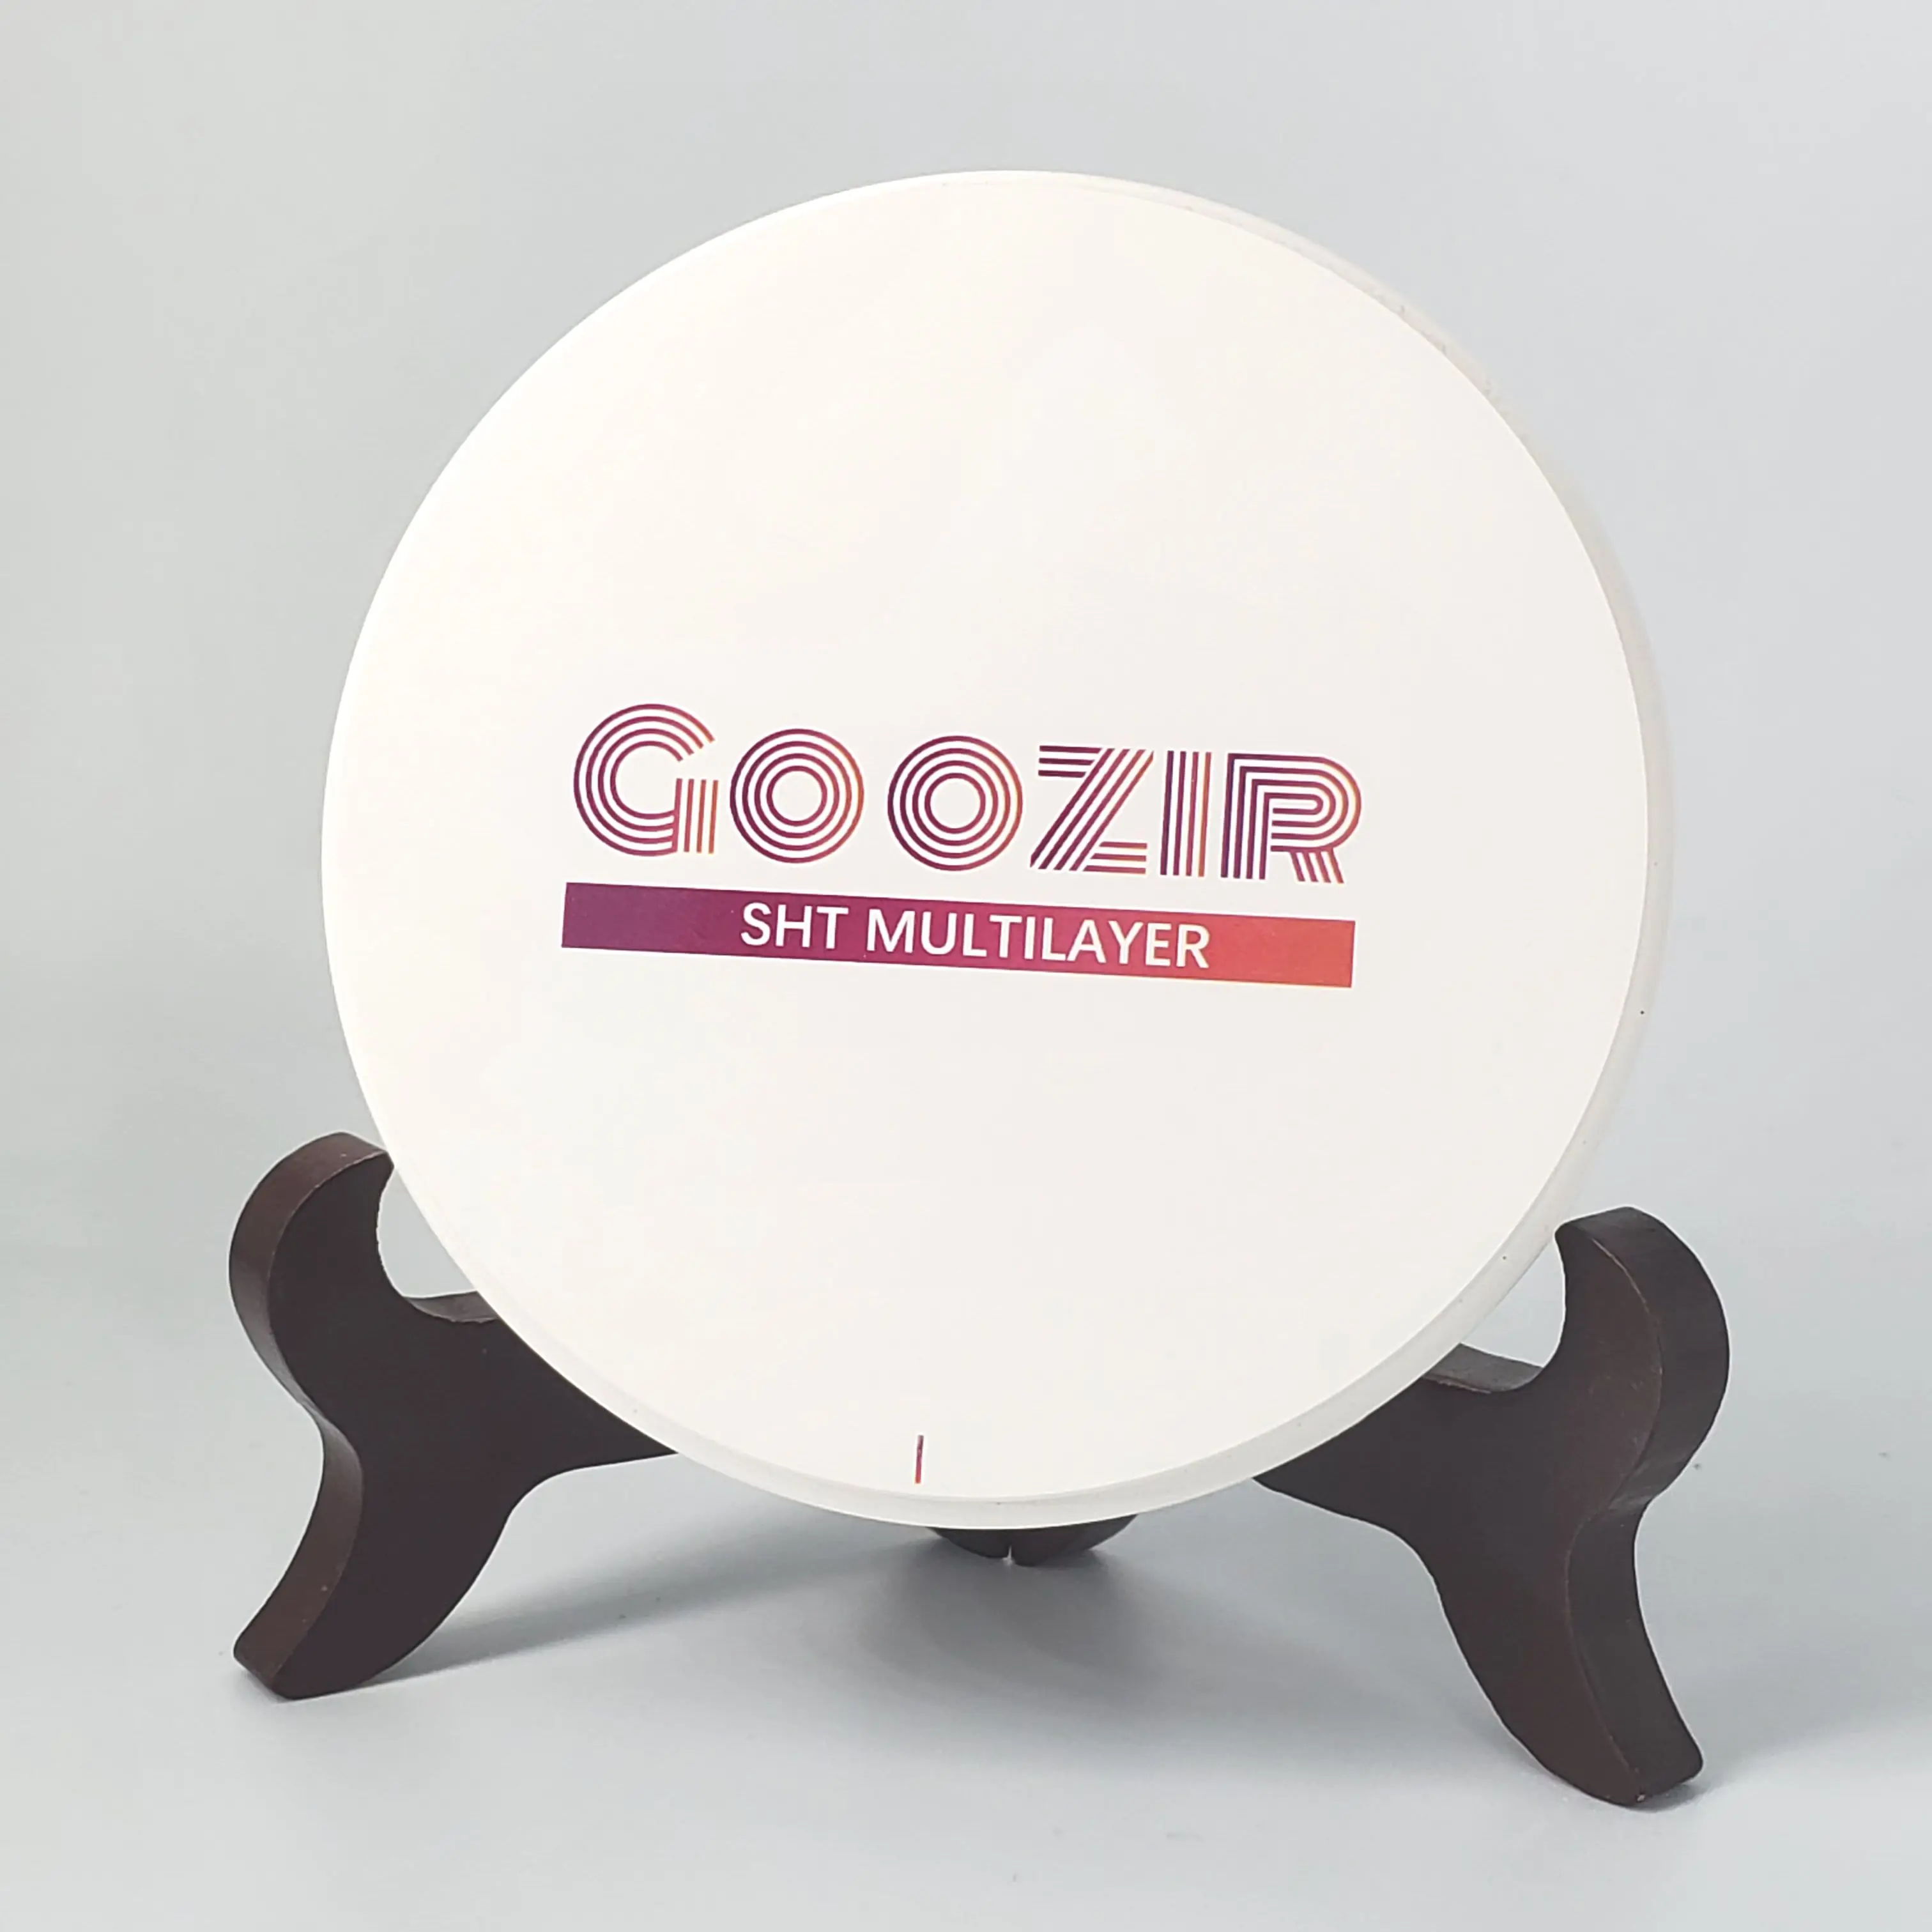 

Goozir Hot sale Lab Use 98mm SHT Multilayer Milling Zirconia Block Dental